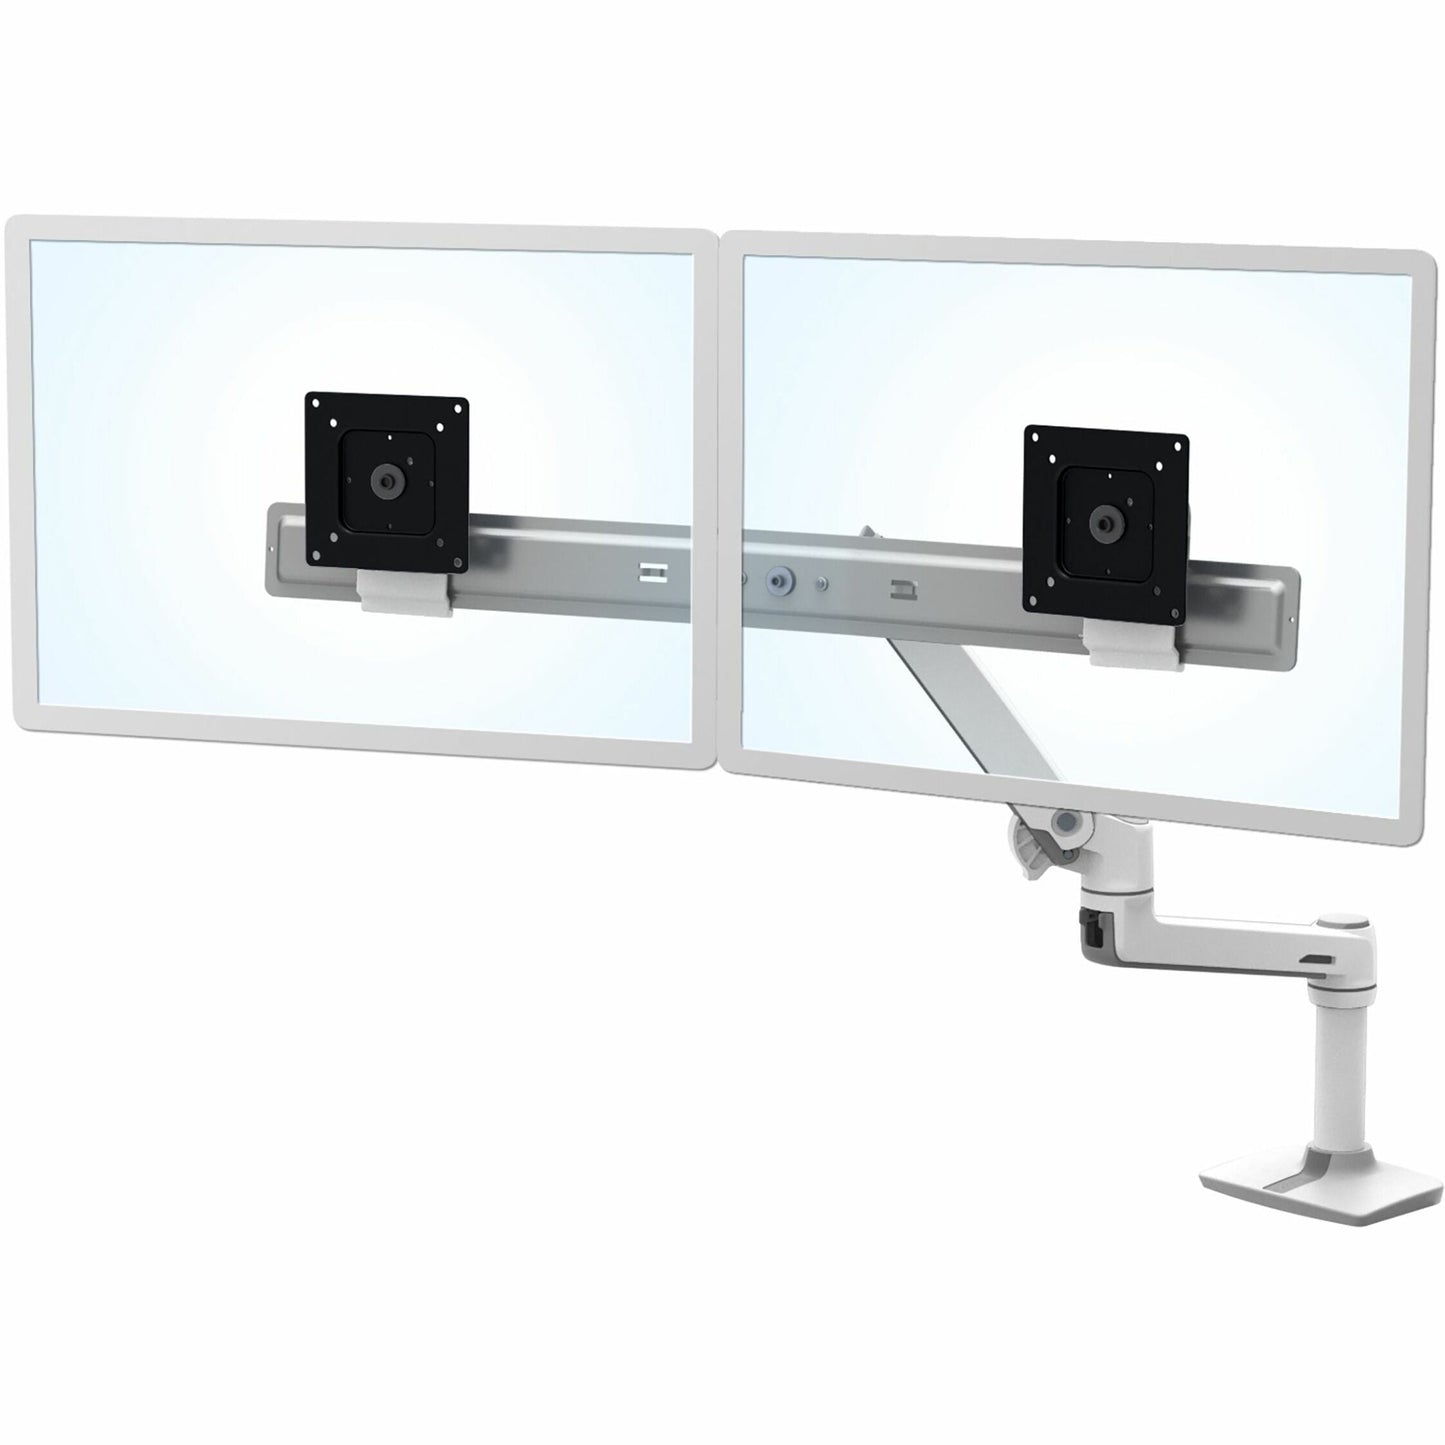 Ergotron Mounting Arm for LCD Monitor - White